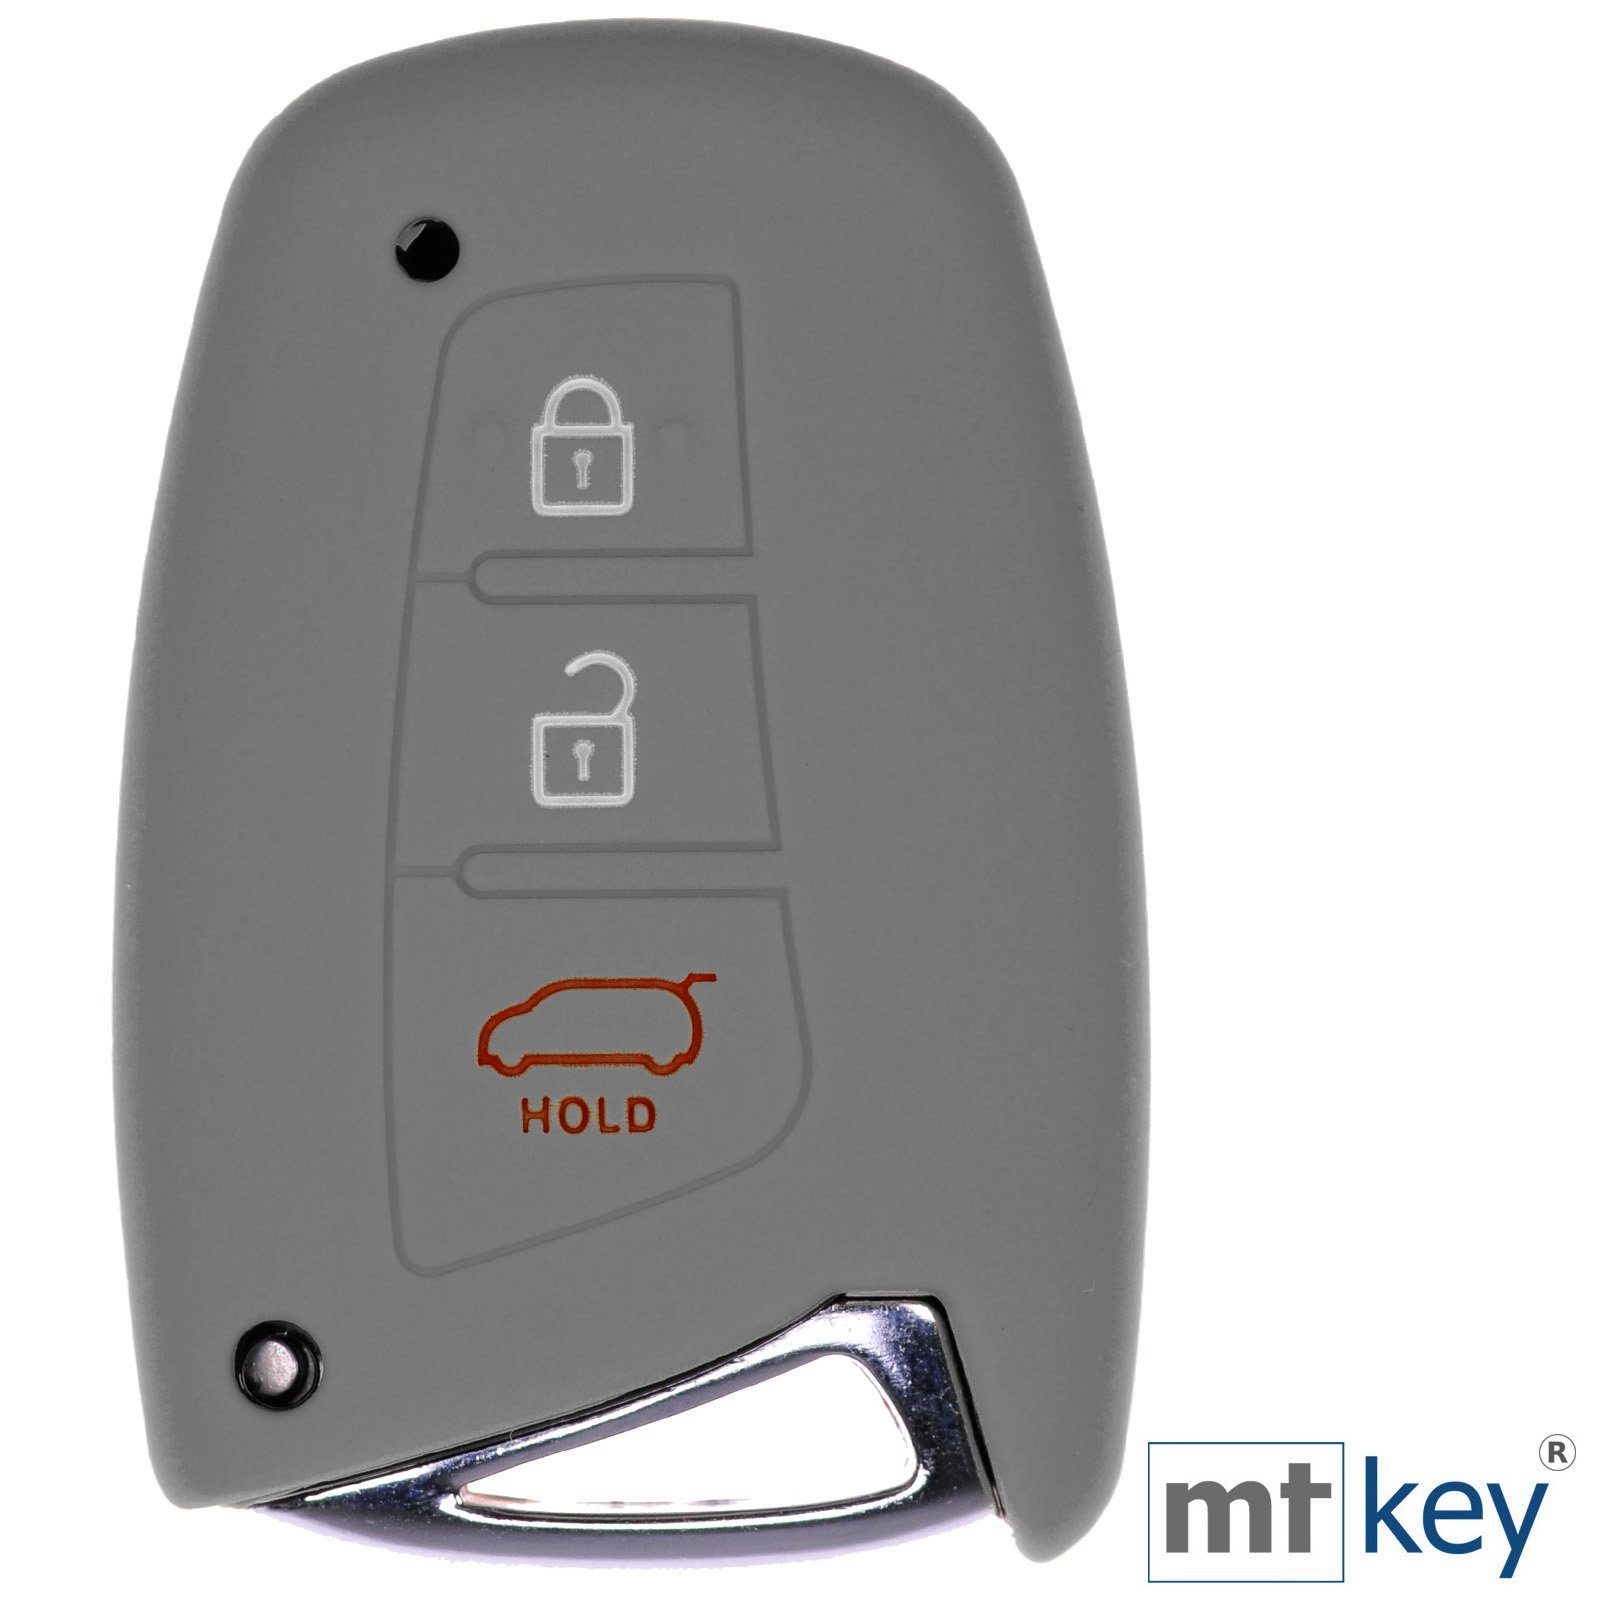 mt-key Schlüsseltasche Autoschlüssel Softcase Silikon Schutzhülle Grau, für Hyundai Genesis Equus ix45 Grandeur Santa Fe Azera 3 Knopf KEYLESS